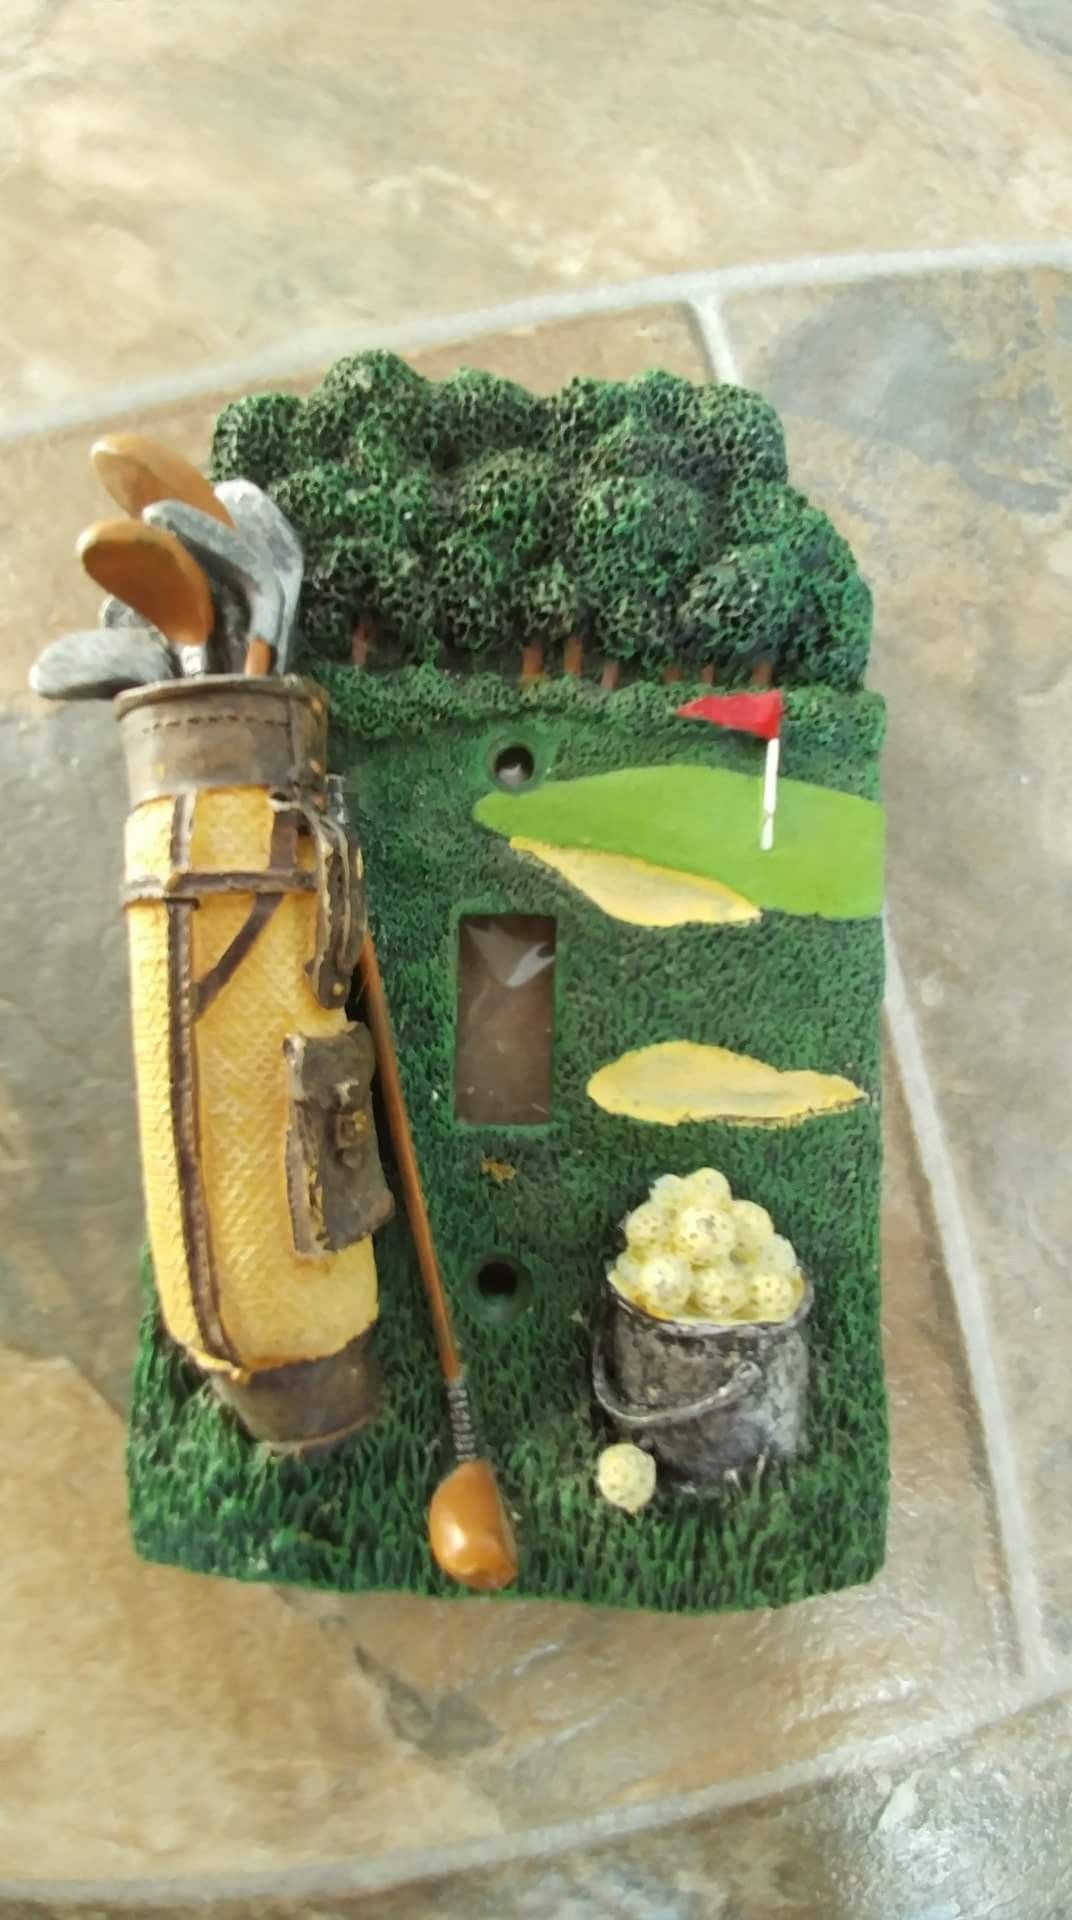 Golf items